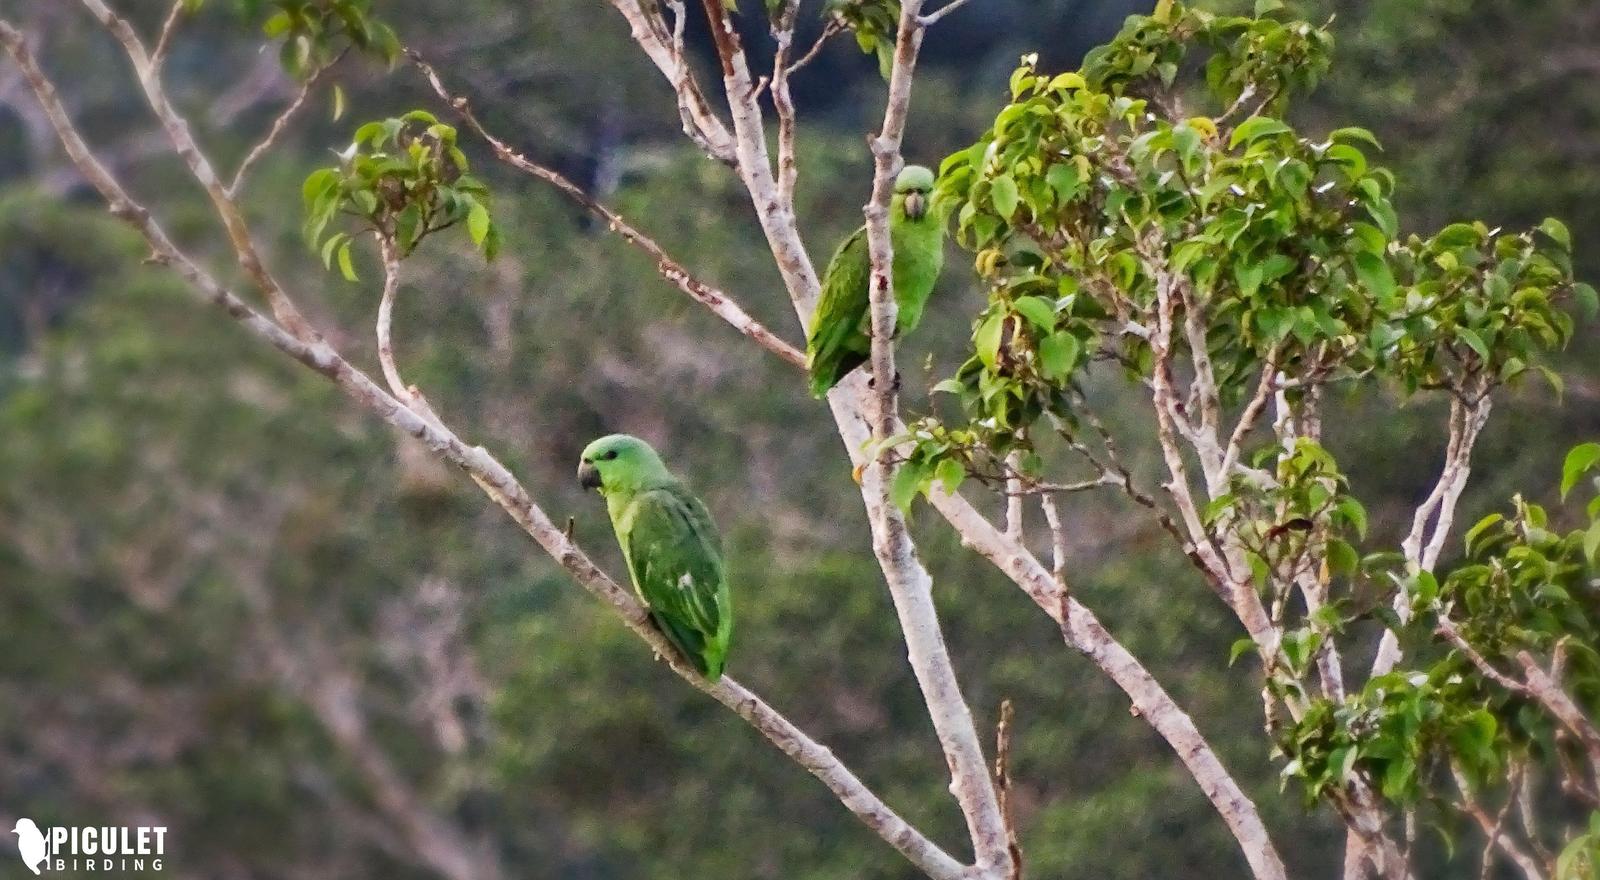 Short-tailed Parrot Photo by Julio Delgado